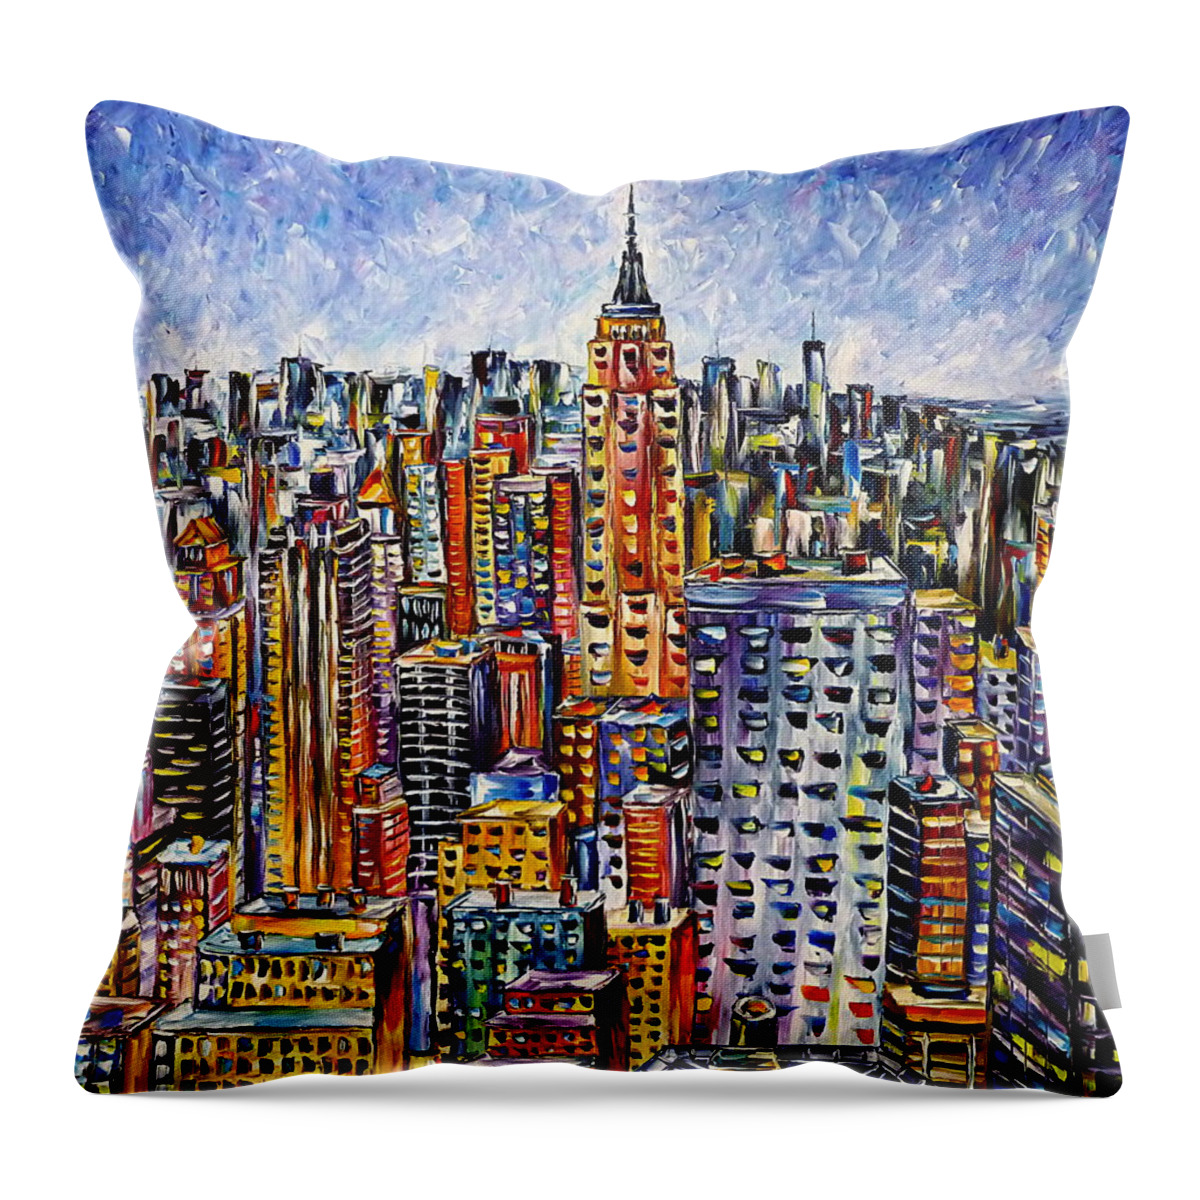 I Love New York Throw Pillow featuring the painting Above New York by Mirek Kuzniar